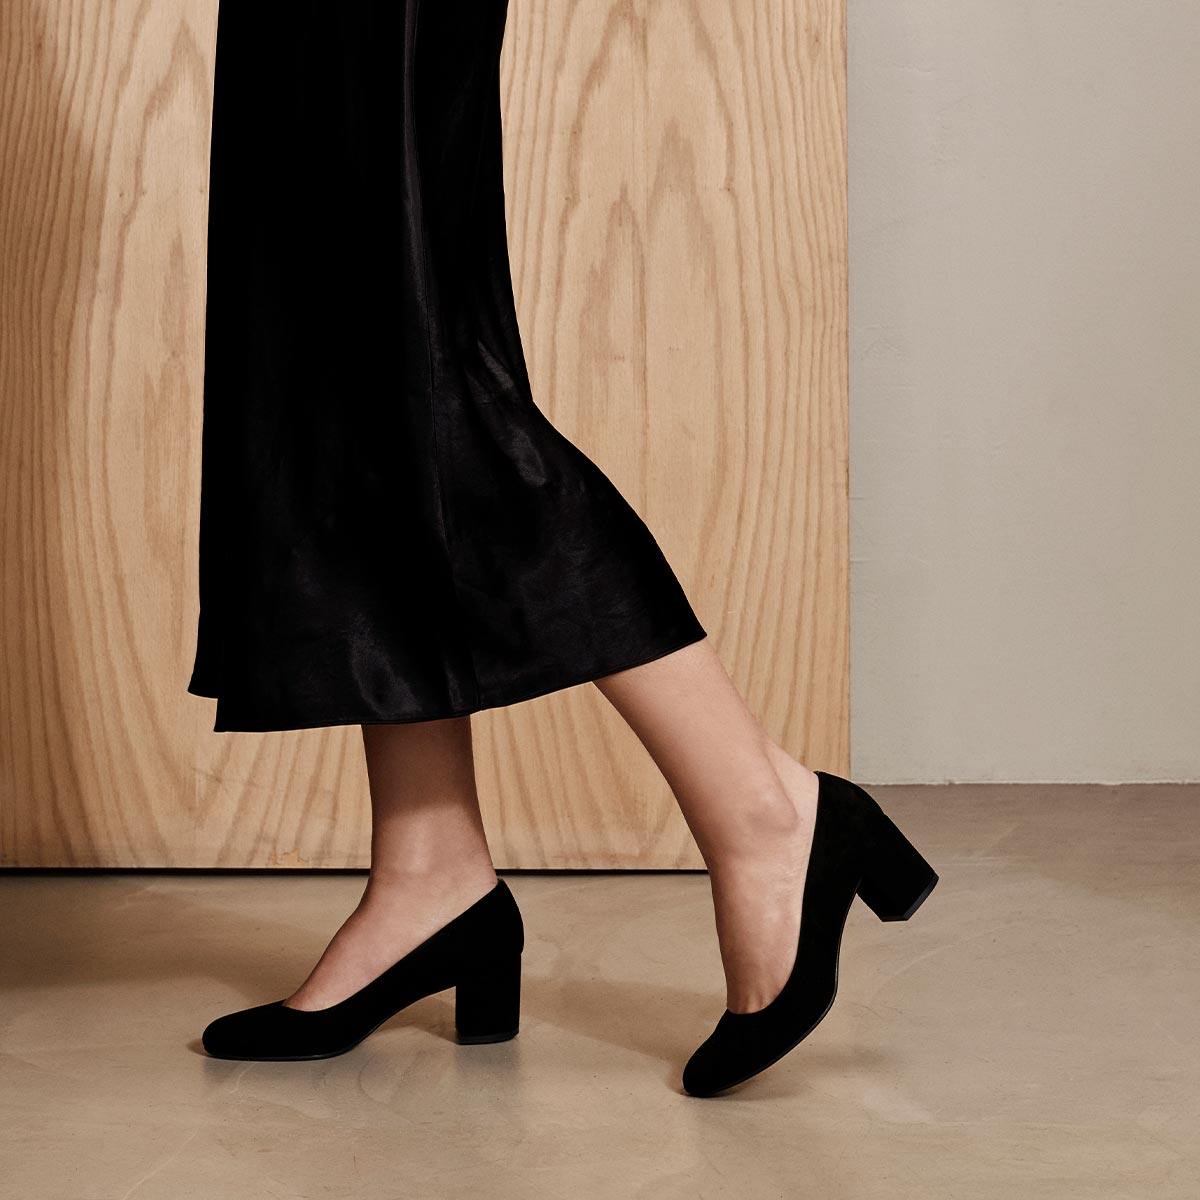 Buy WFS Women 3 Inch Block Heel Sandal,Black,36 at Amazon.in